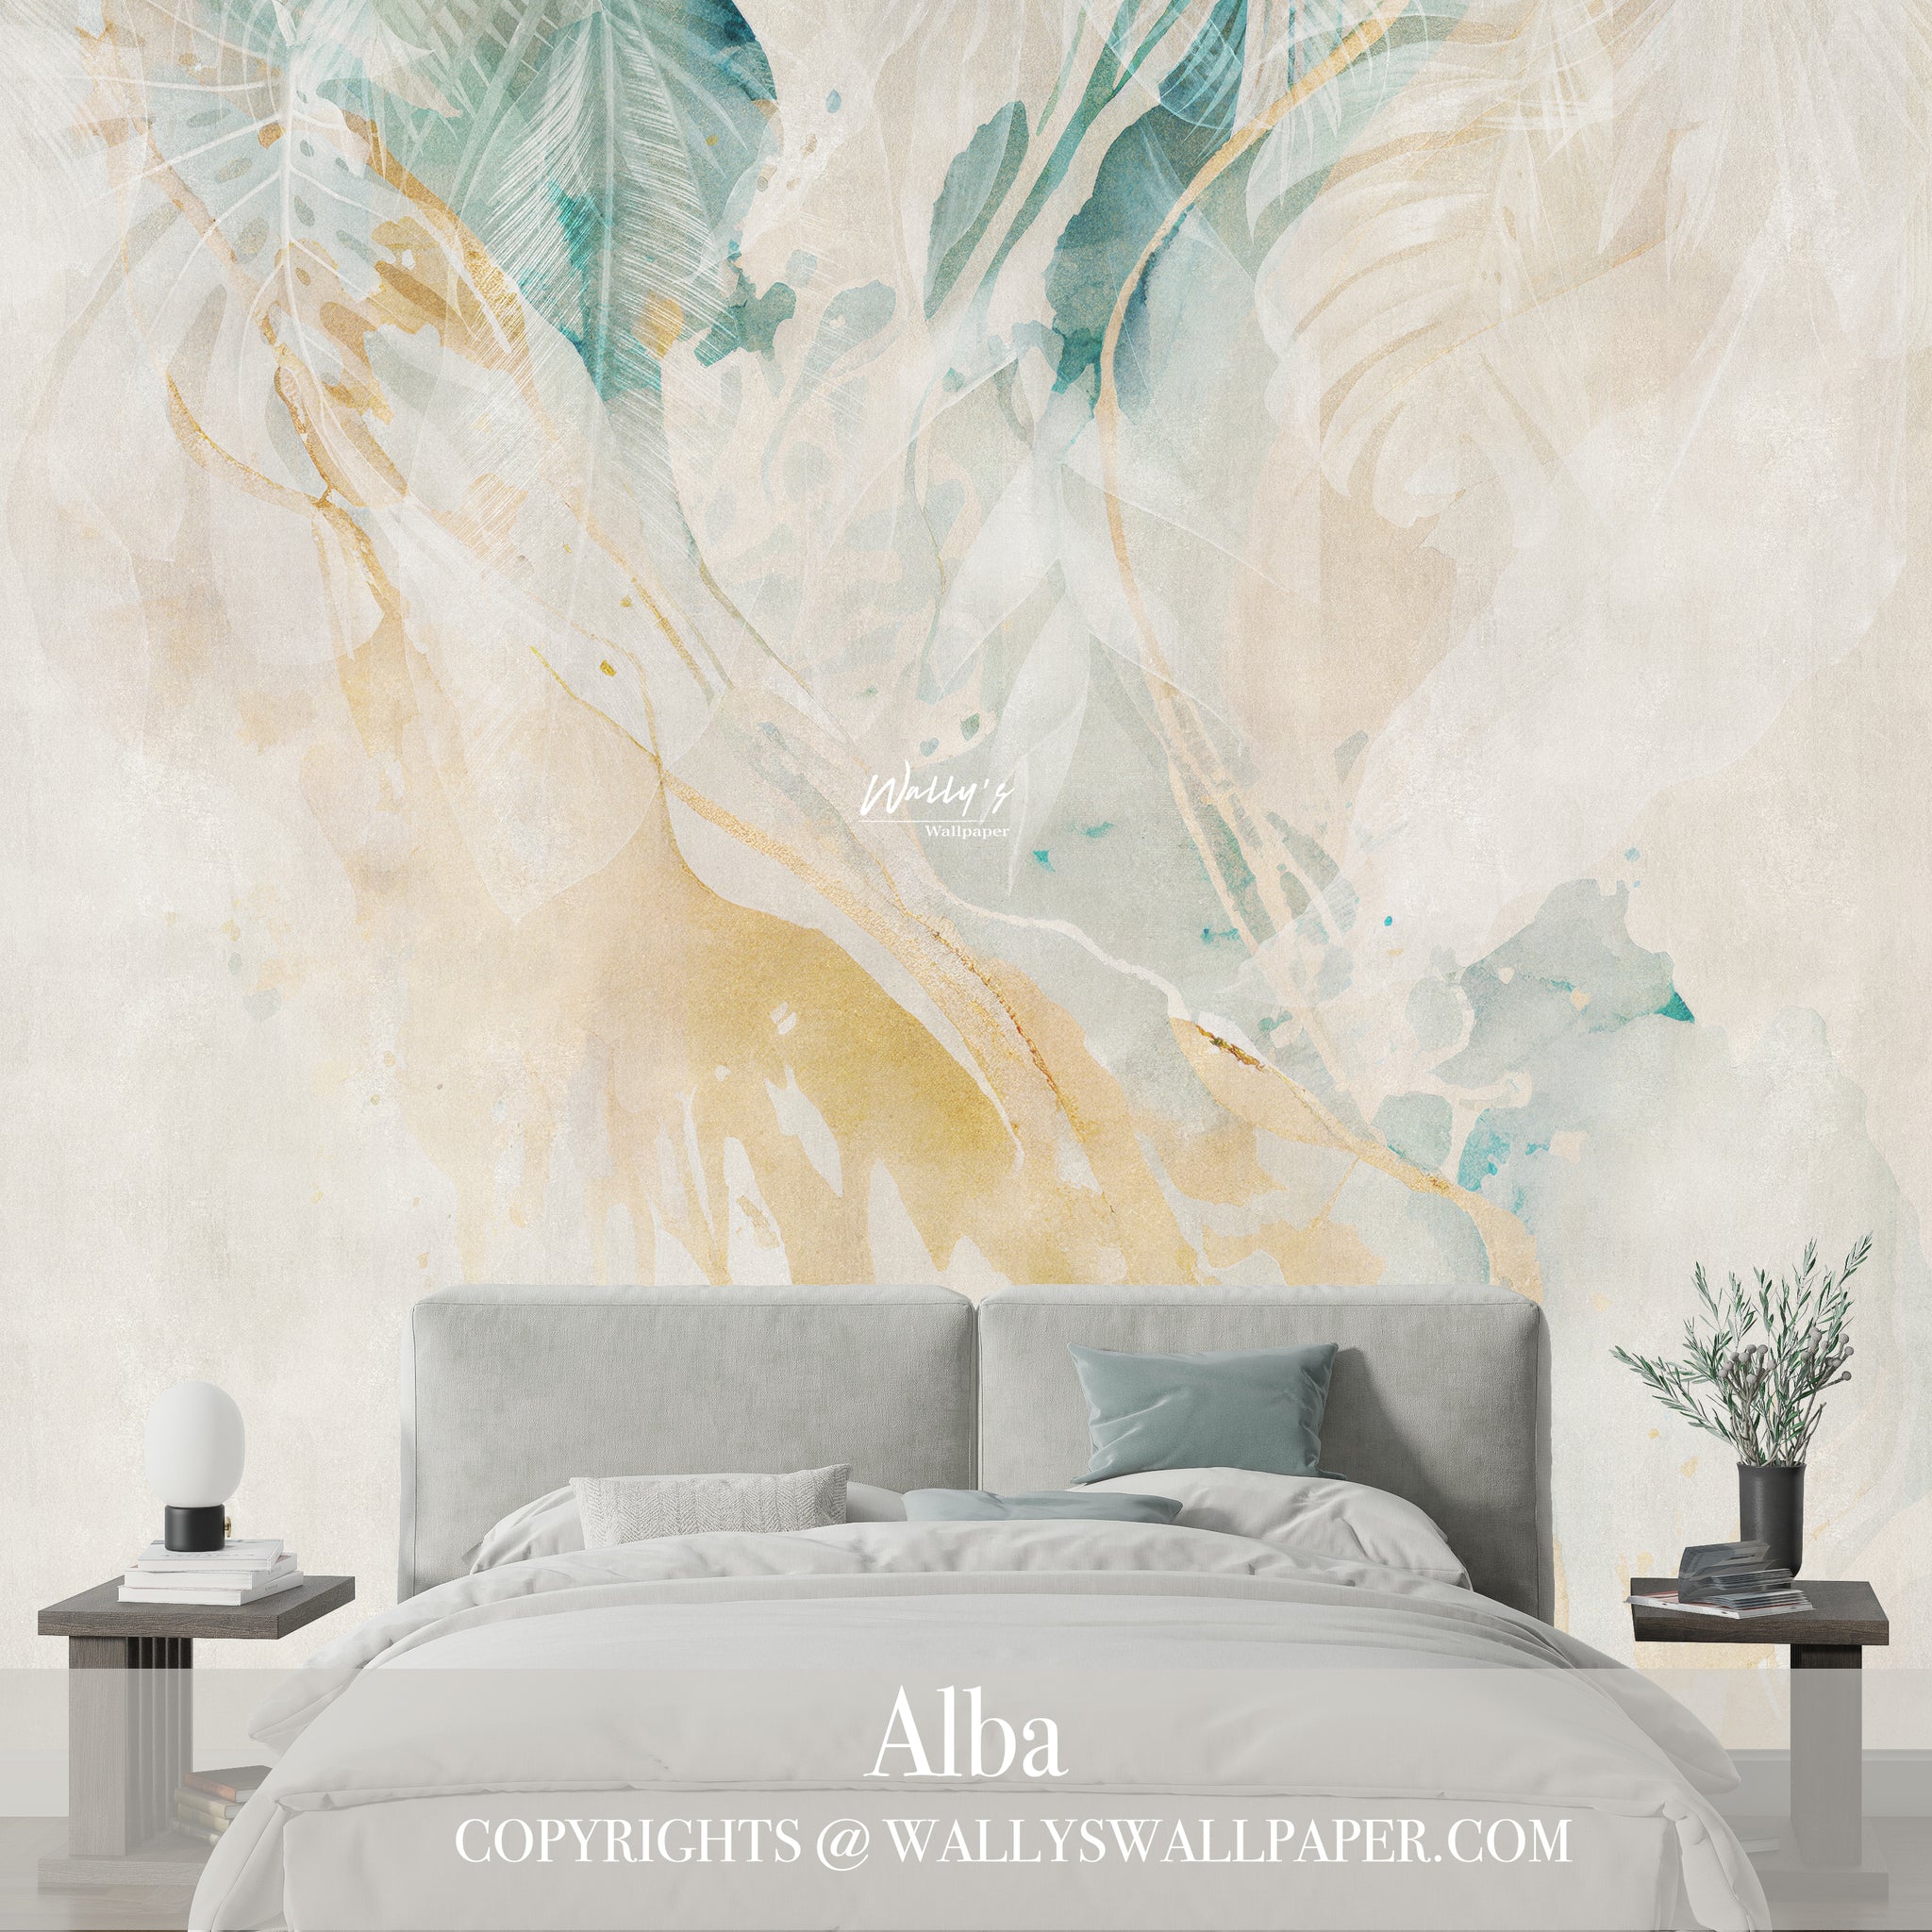 Alba Abstract